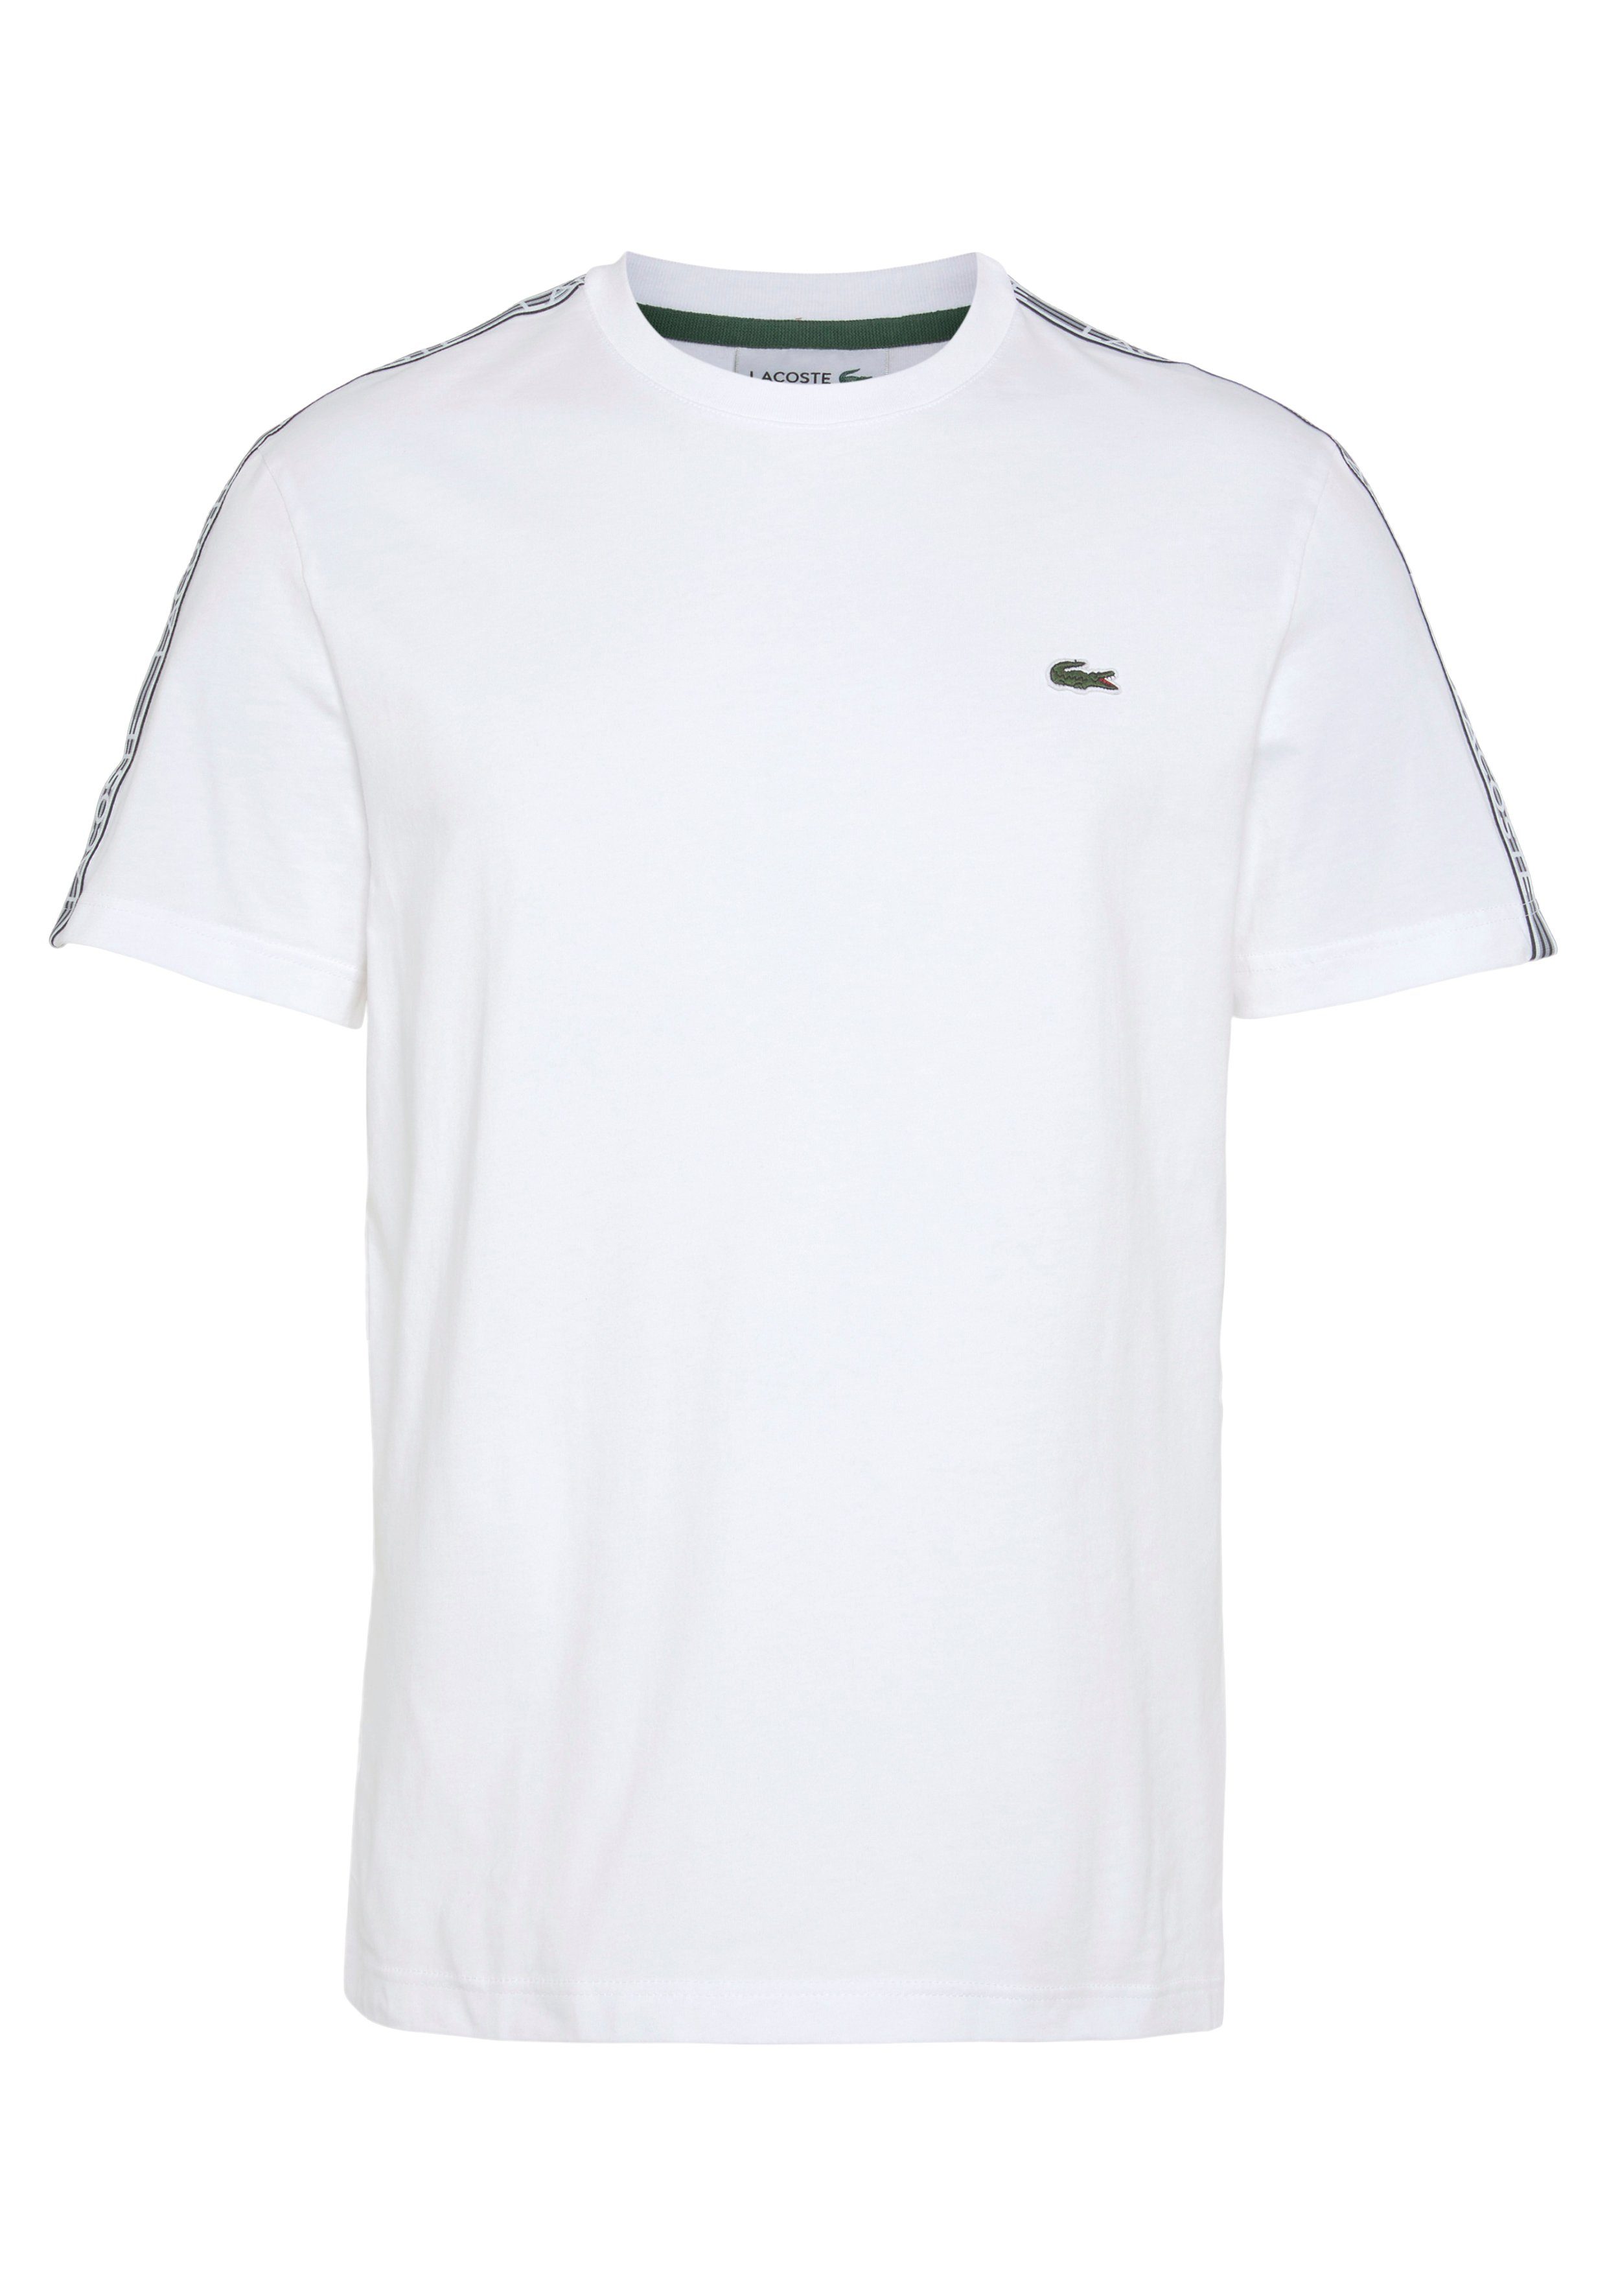 Kontrastband white T-Shirt den an Schultern mit Lacoste beschriftetem